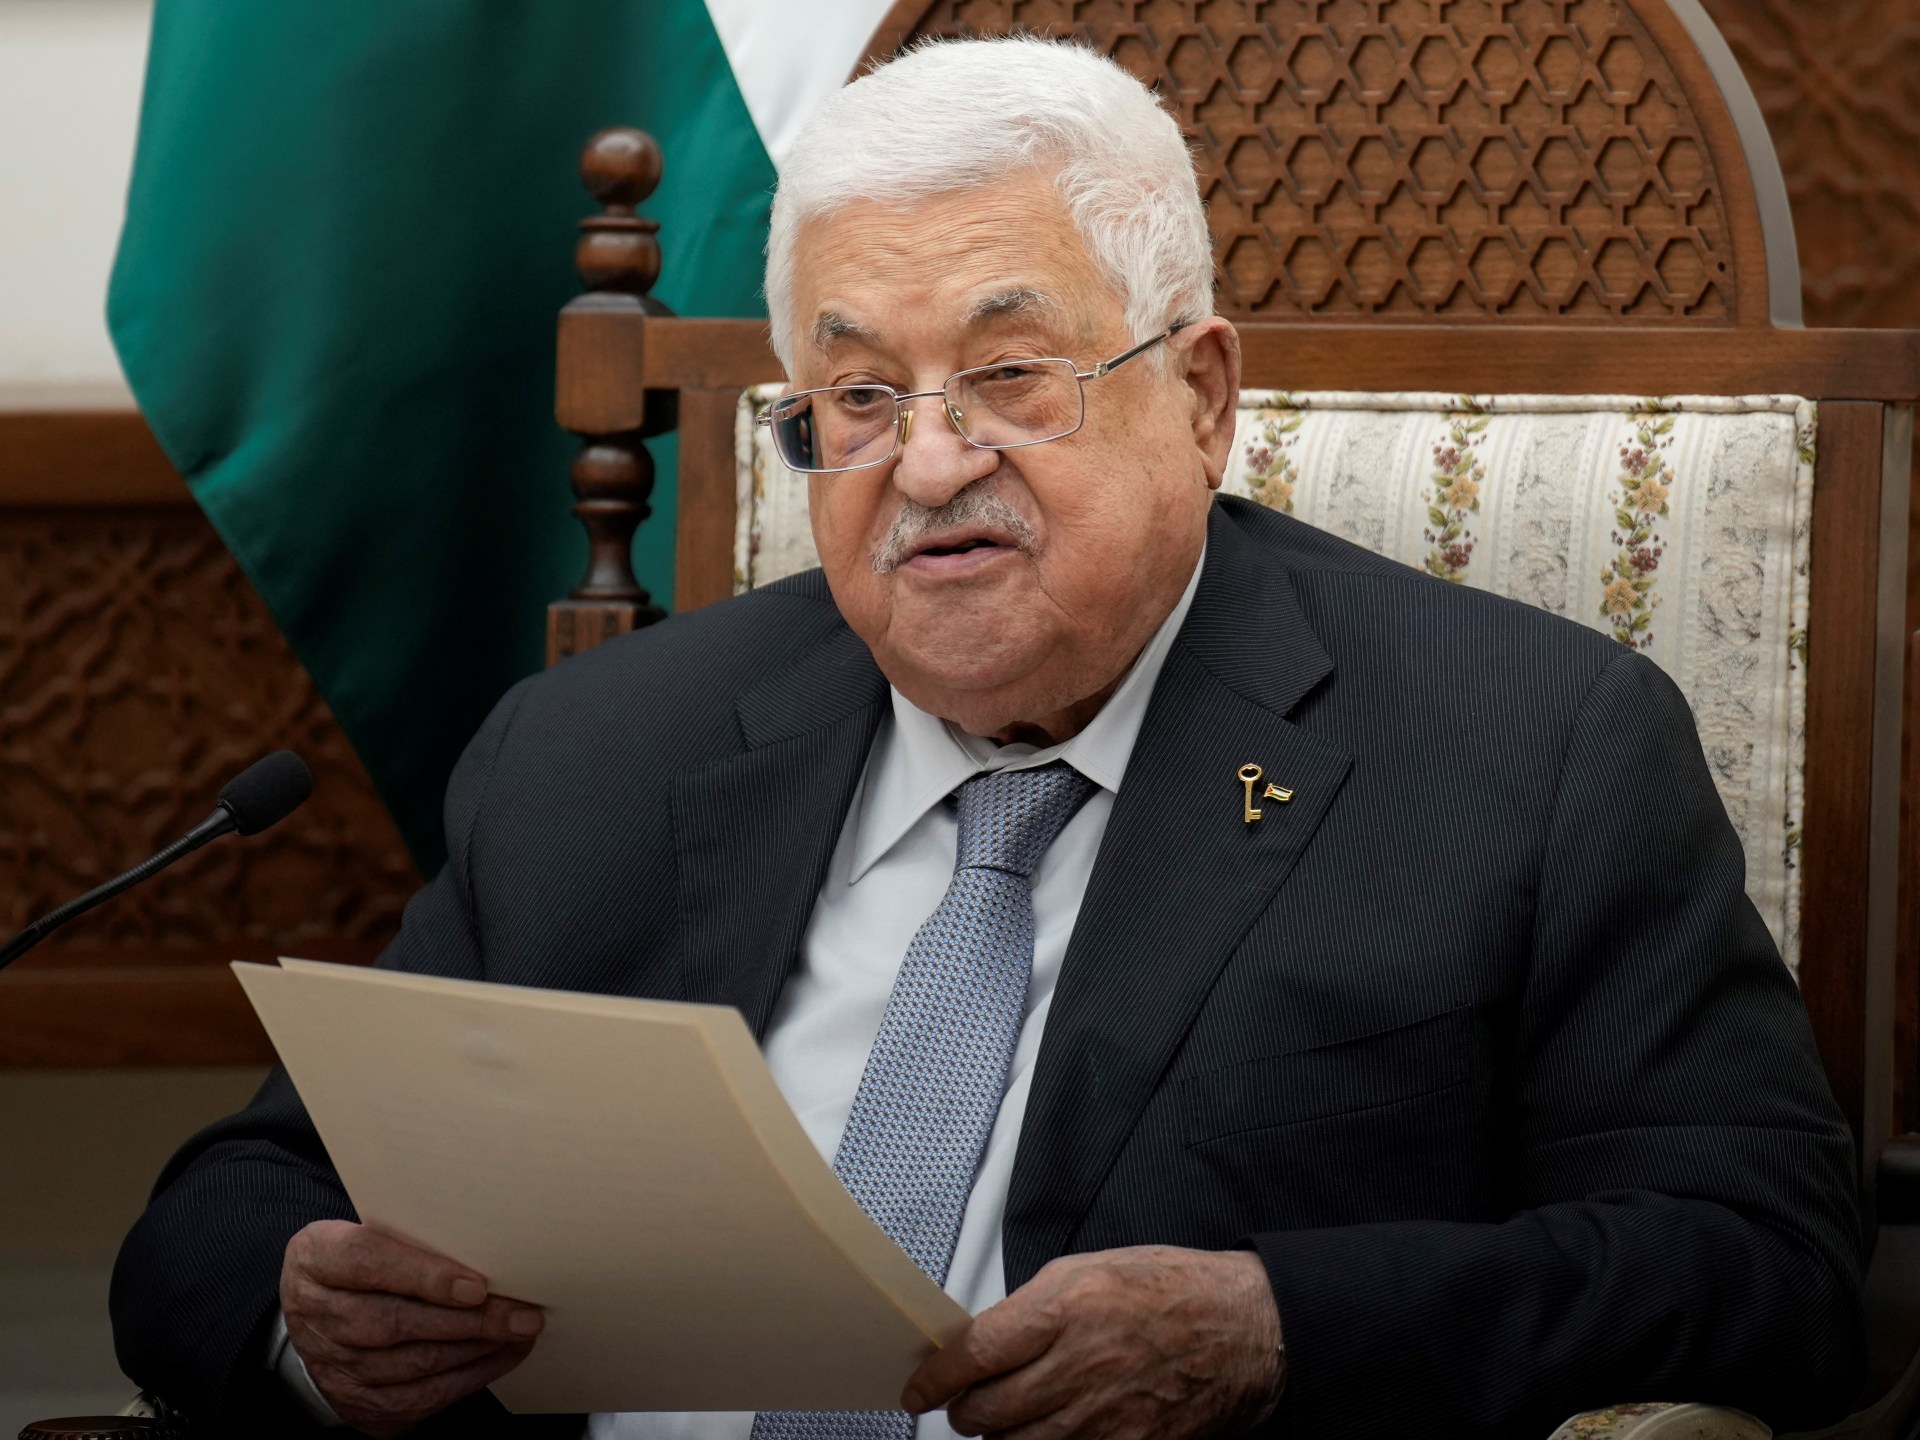 Palestinian President Mahmoud Abbas in Qatar for Gaza ceasefire talks | Israel War on Gaza News